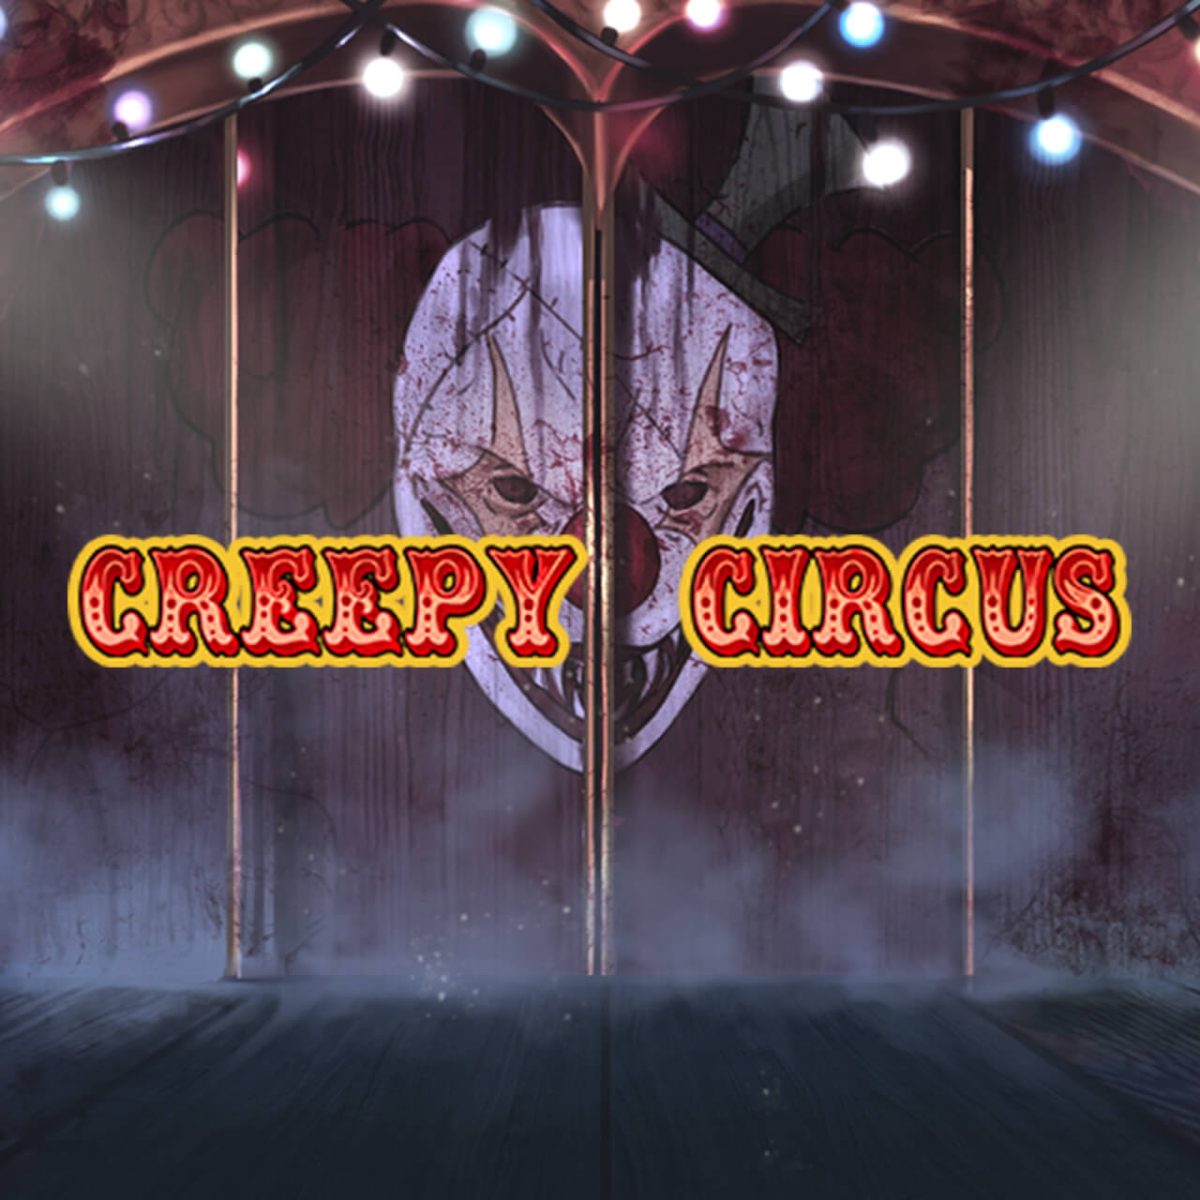 Creepy Circus